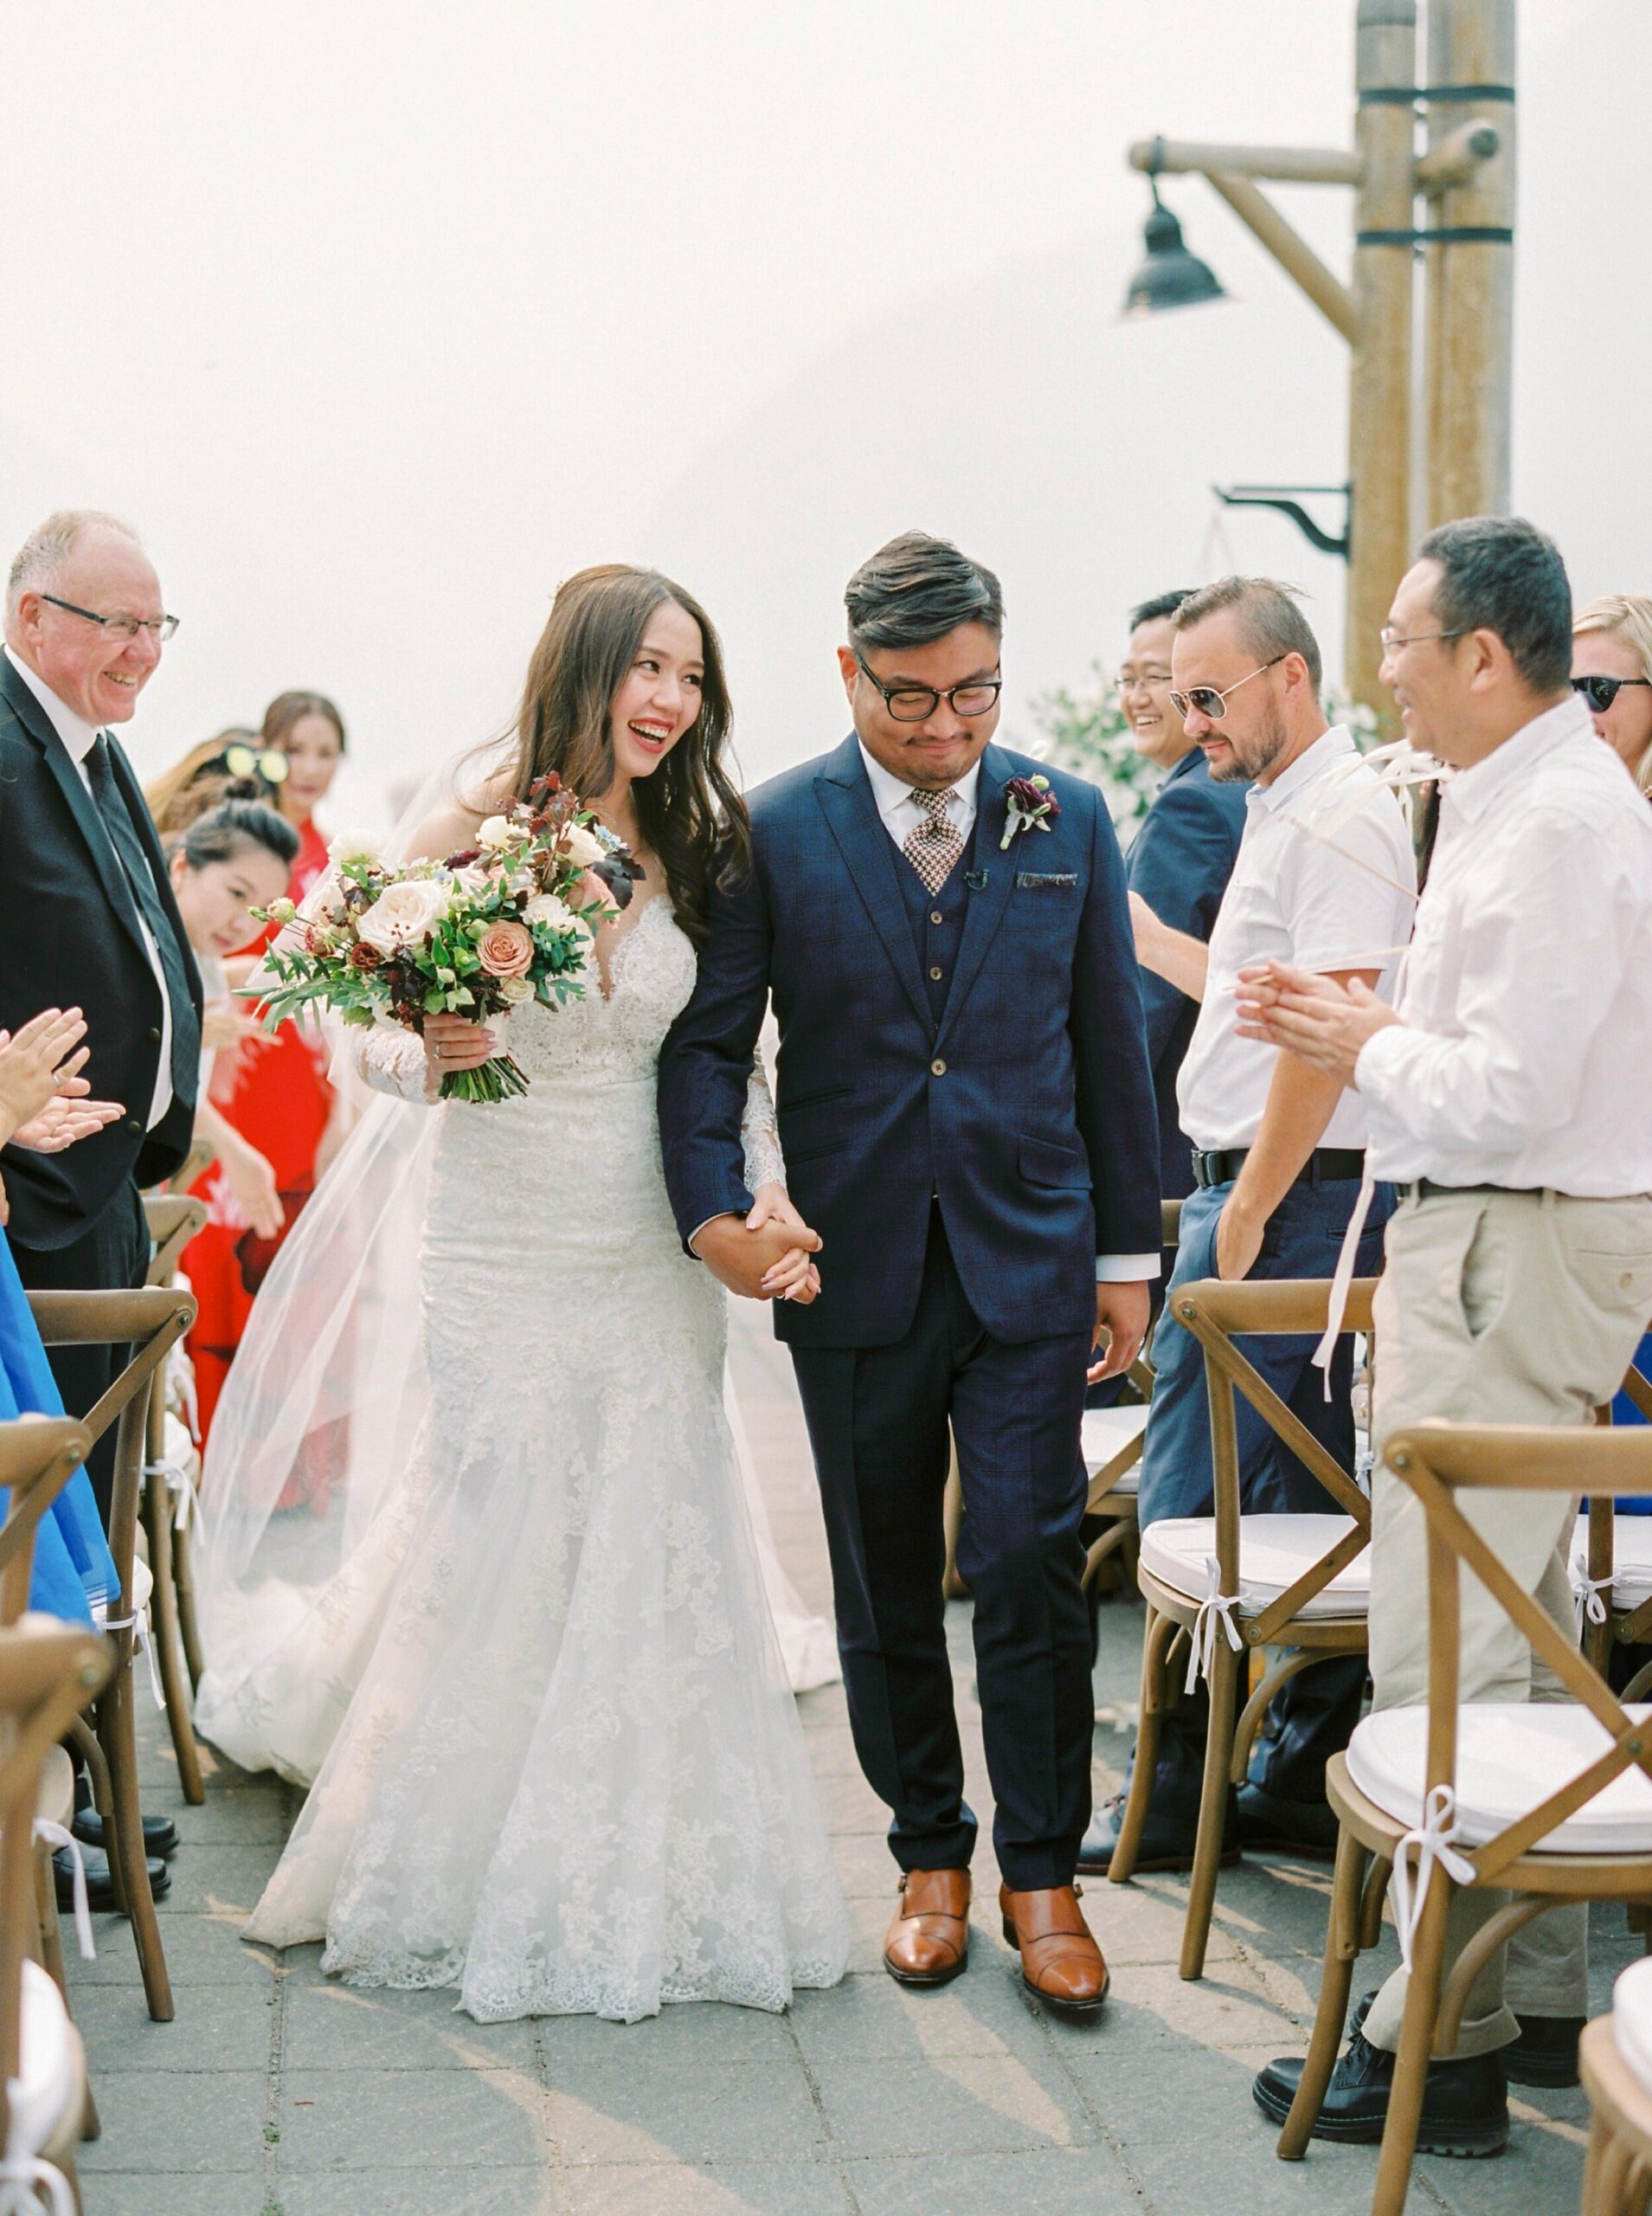  Lake Louise wedding photographers | Justine milton photography | fine art film destination wedding photographer | wedding ceremony bride and groom walk down the aisle 